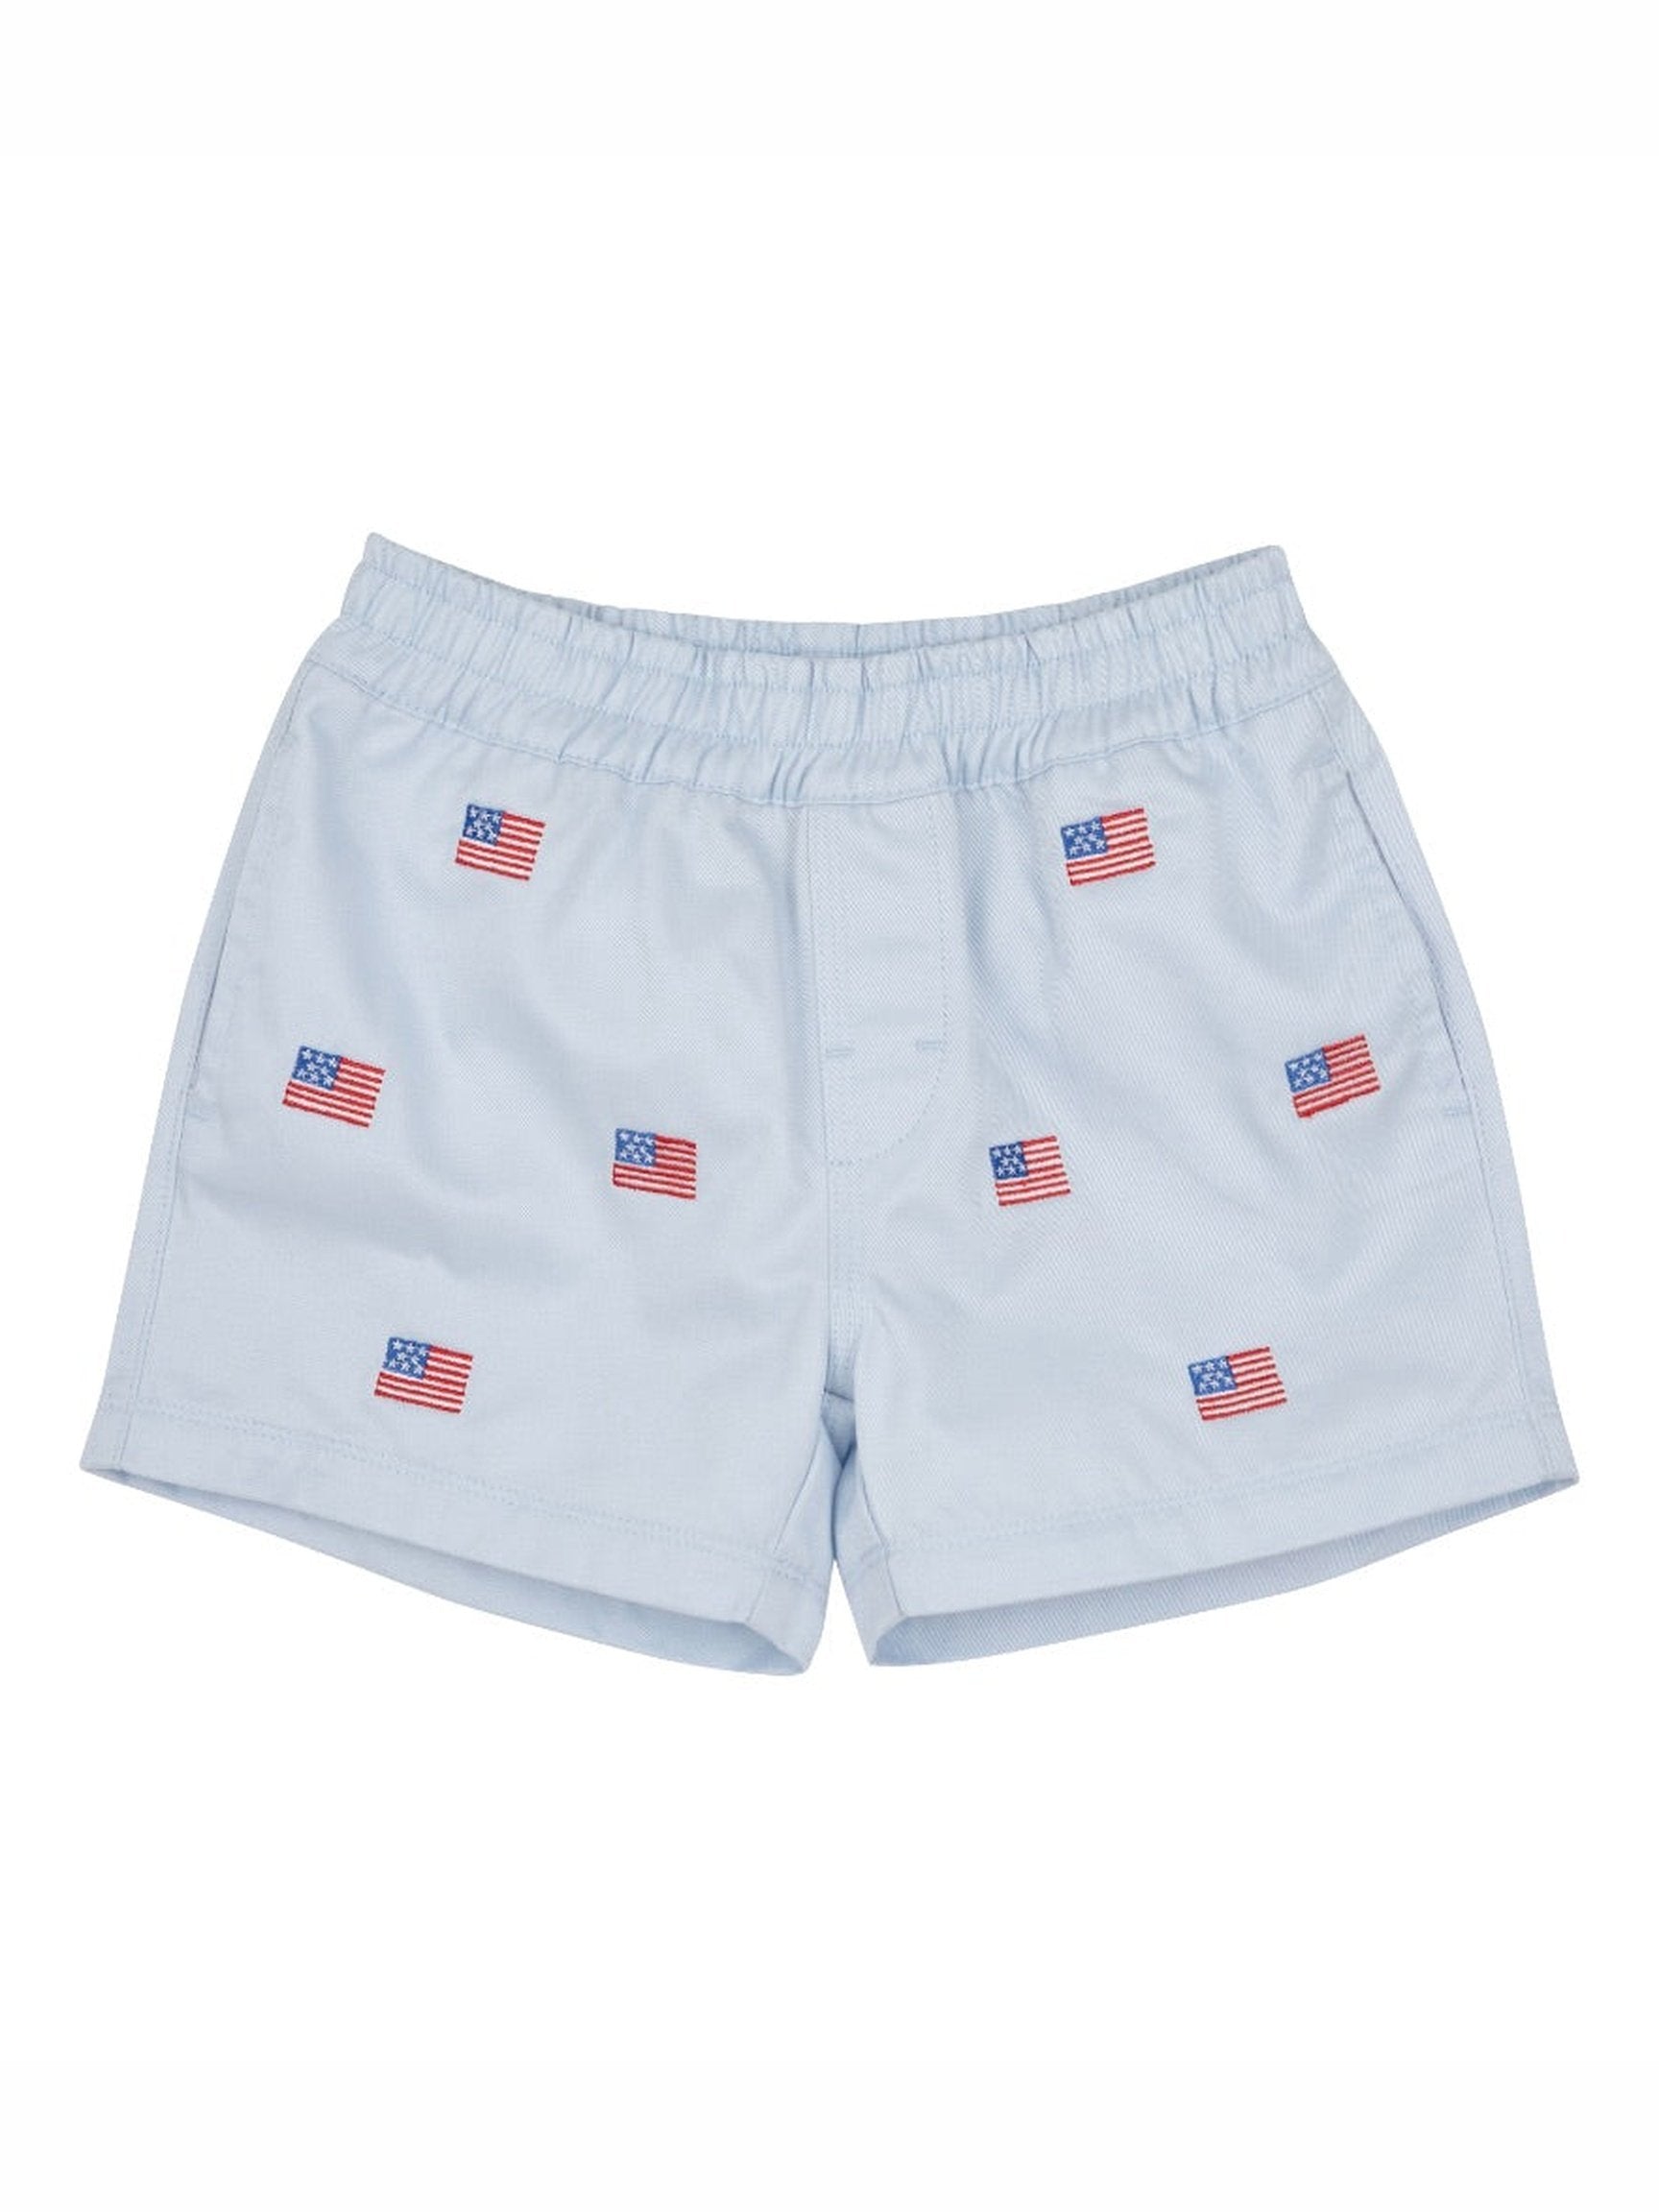 Critter Sheffield Shorts - American Flags